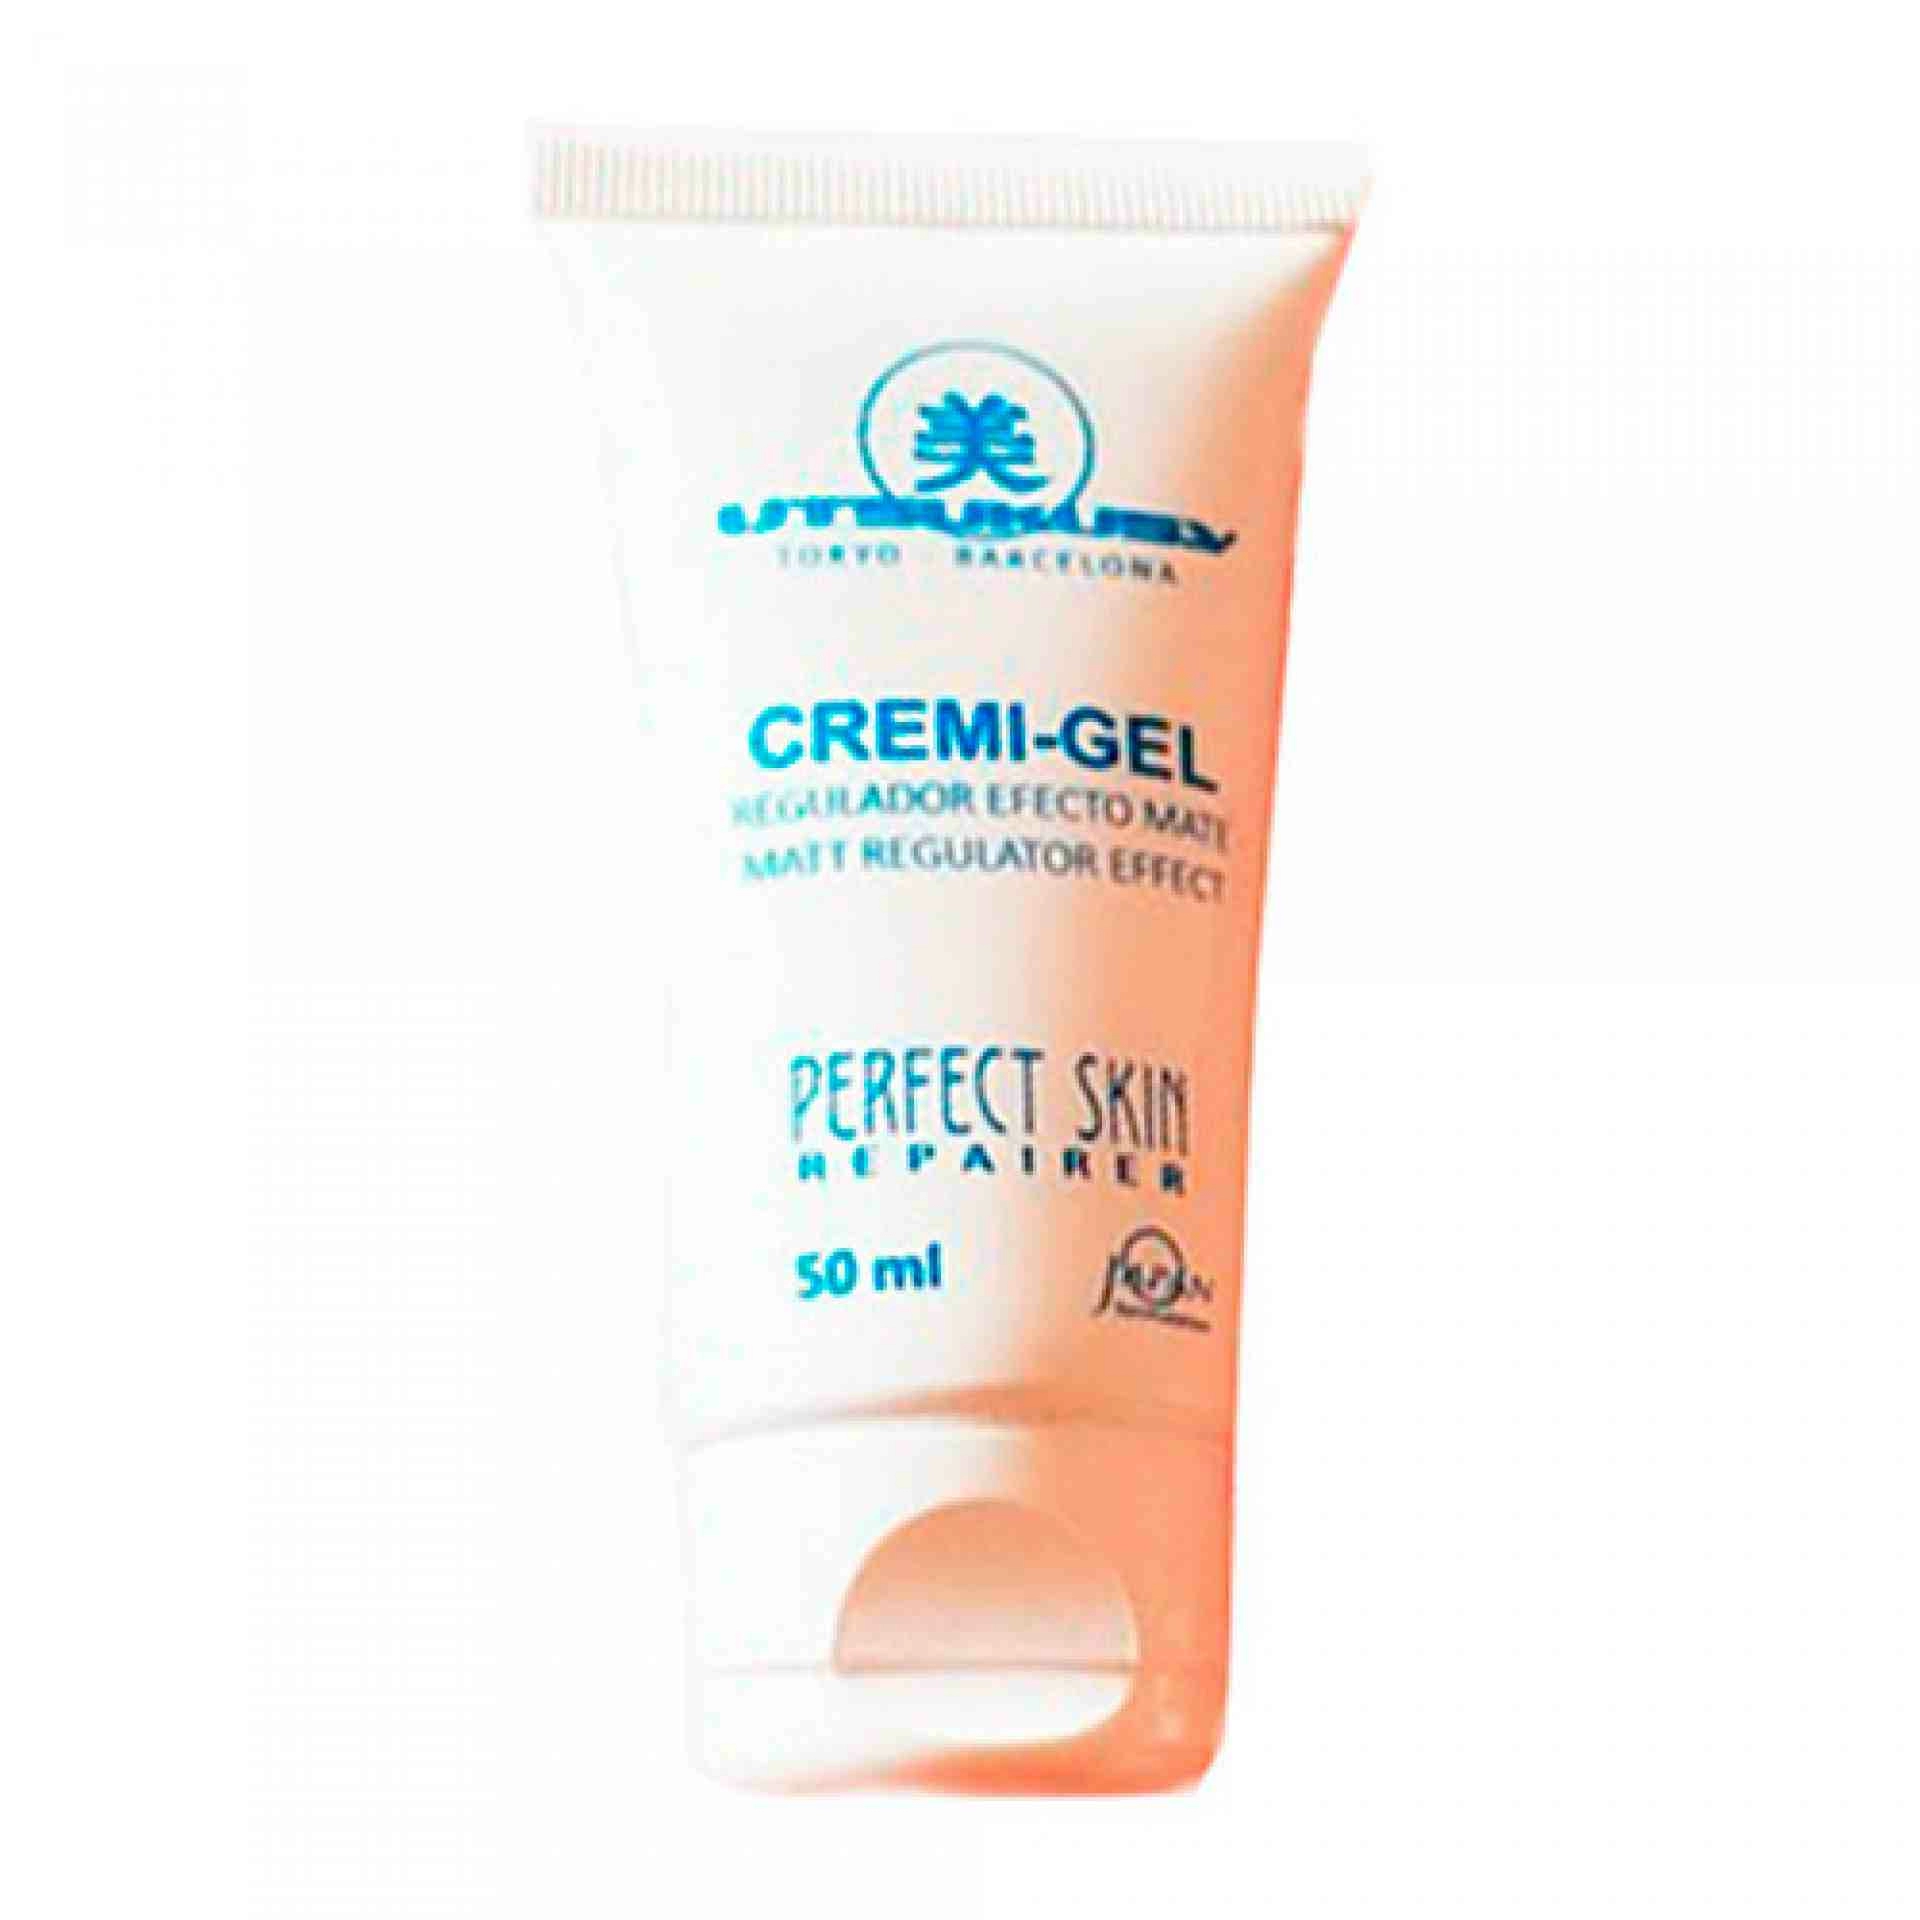 Cremi Gel Matt Effect | Crema Protectora 50ml - Perfect Skin - Utsukusy ®